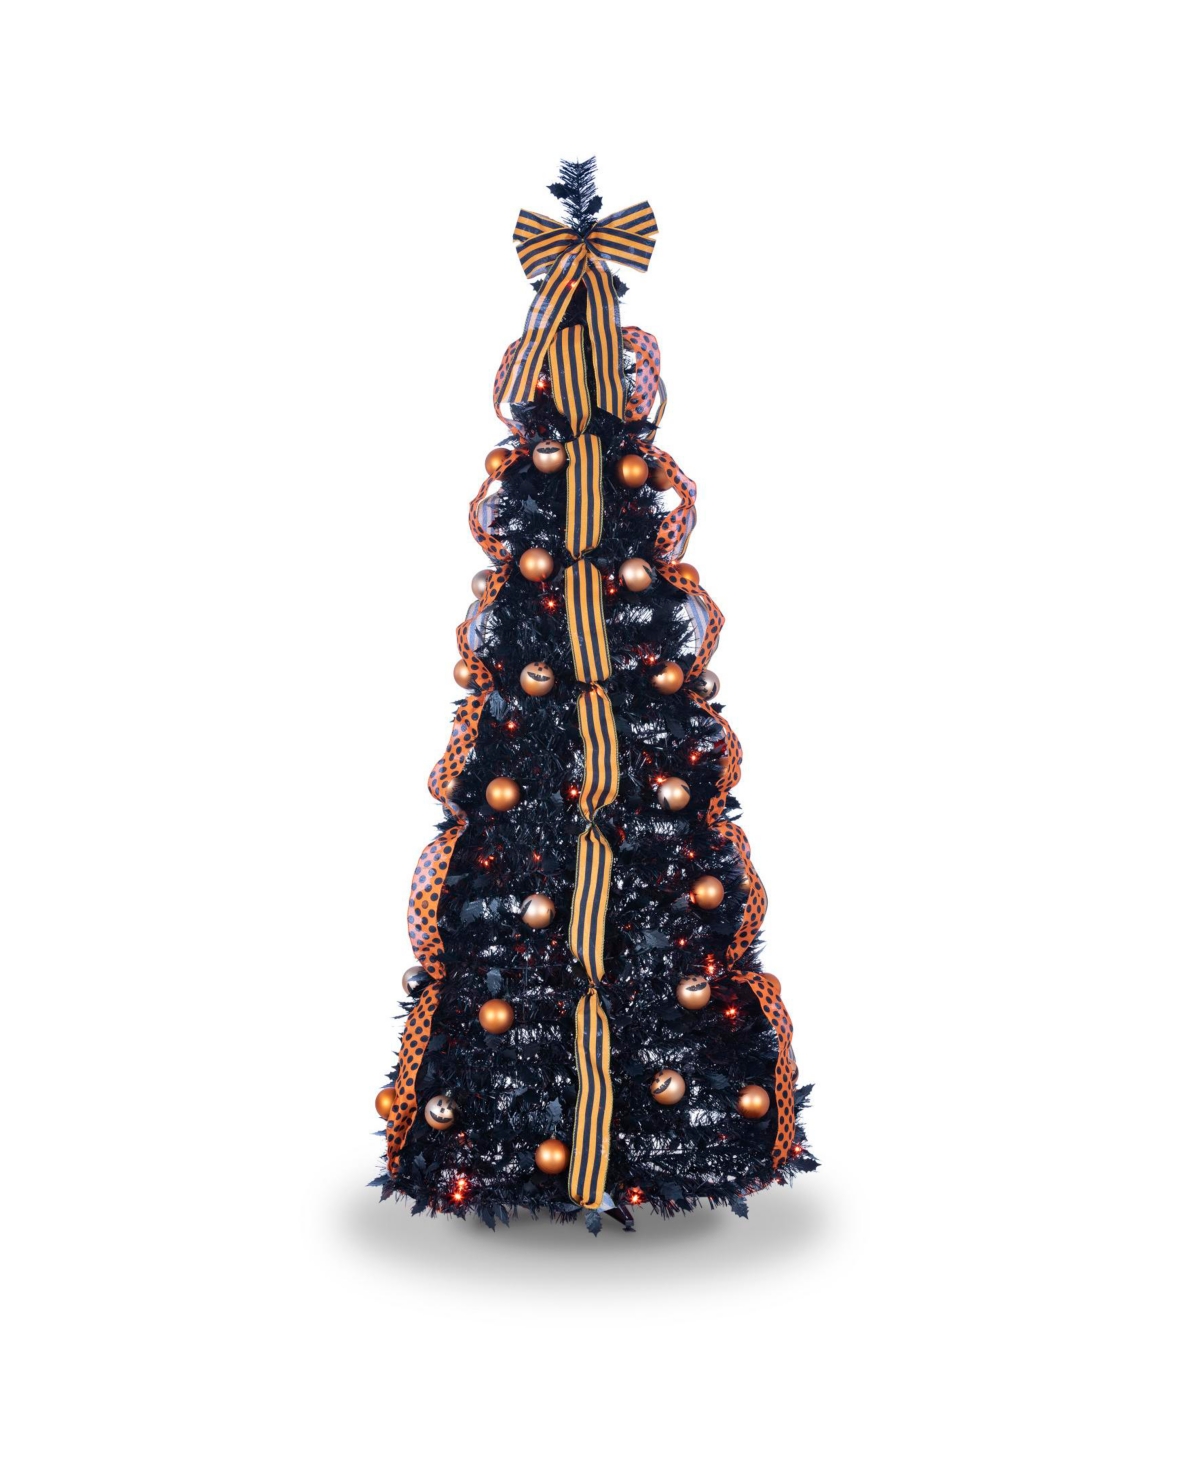 6' Pop-Up Pre-Lit Halloween Tree with 100 Led Lights - Black